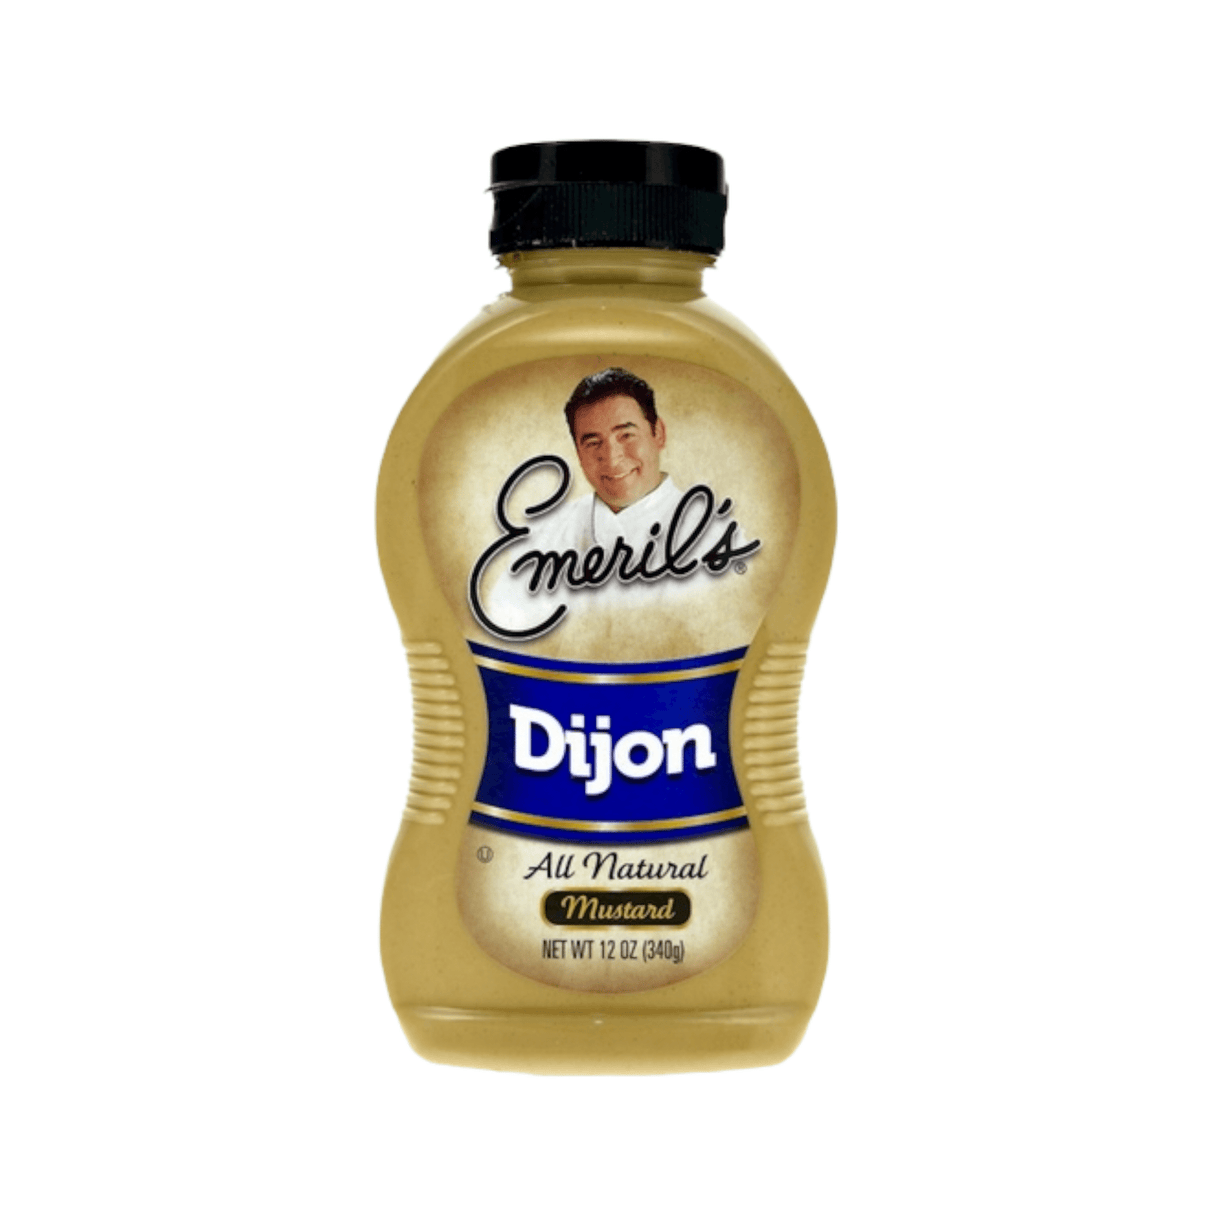 Emeril’s Dijon Mustard